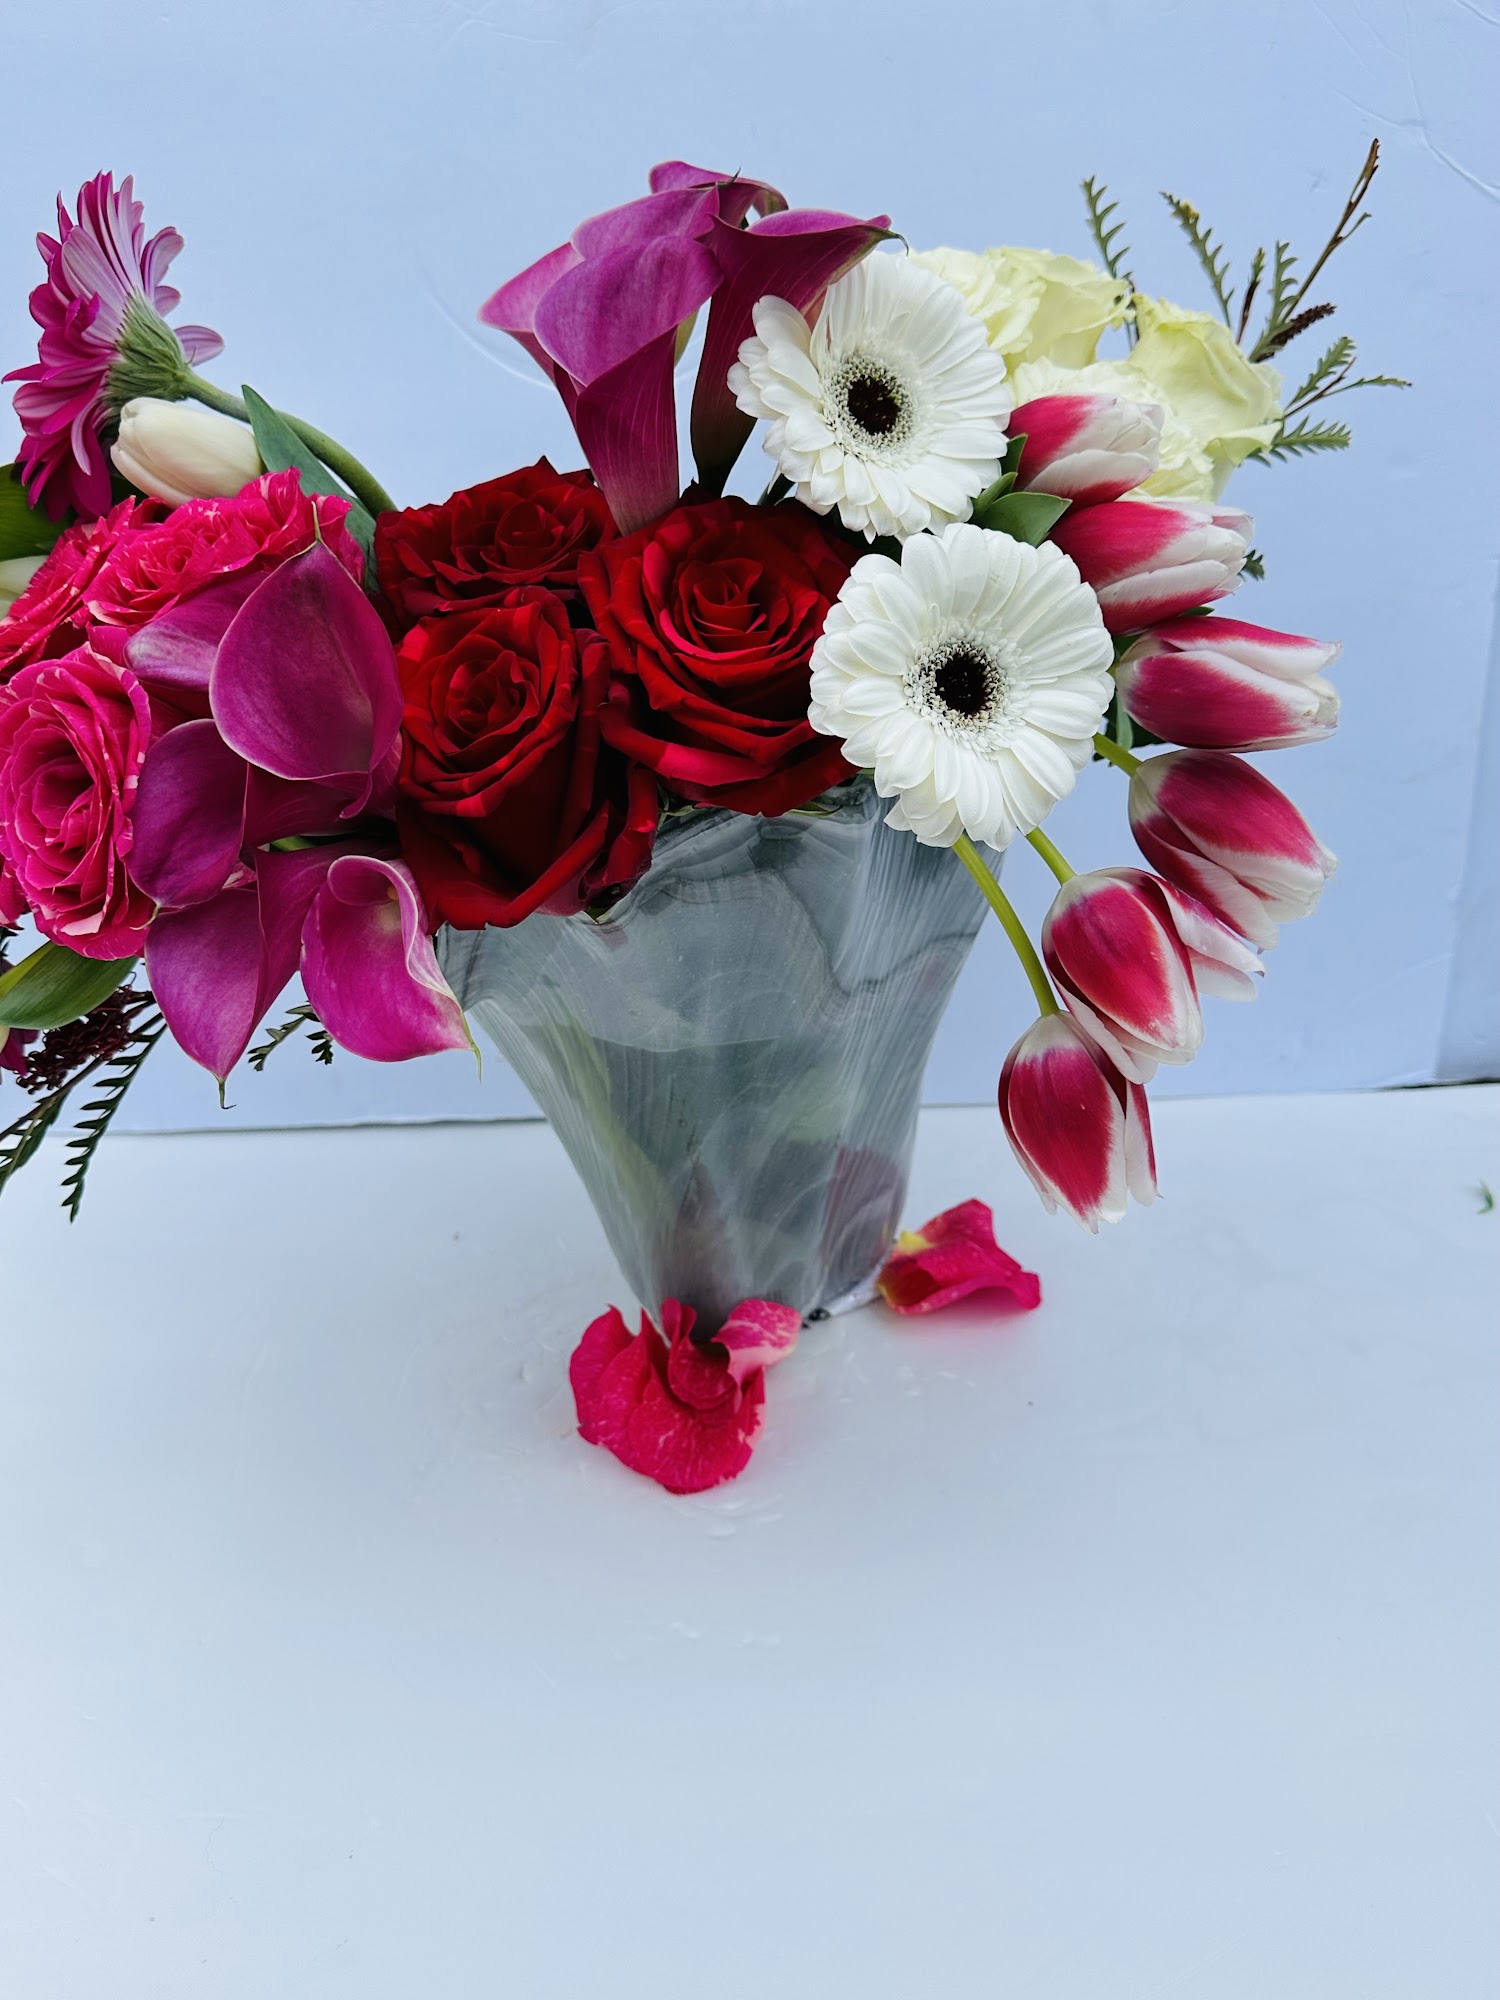 Timeless Elegance Flowers and Events Squantum St, Milton Massachusetts 02186